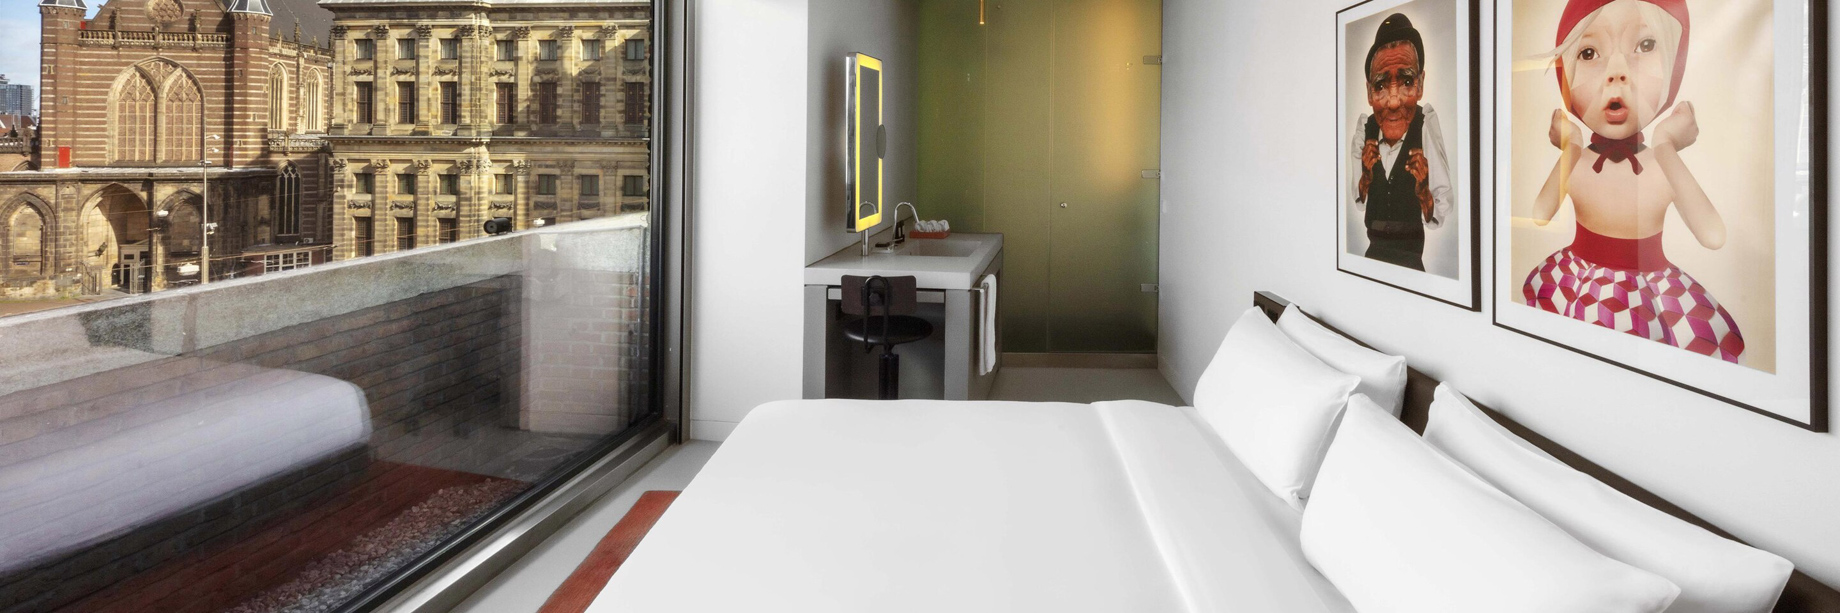 W Amsterdam Hotel – Amsterdam, Netherlands – Wonderful Exchange Bedroom